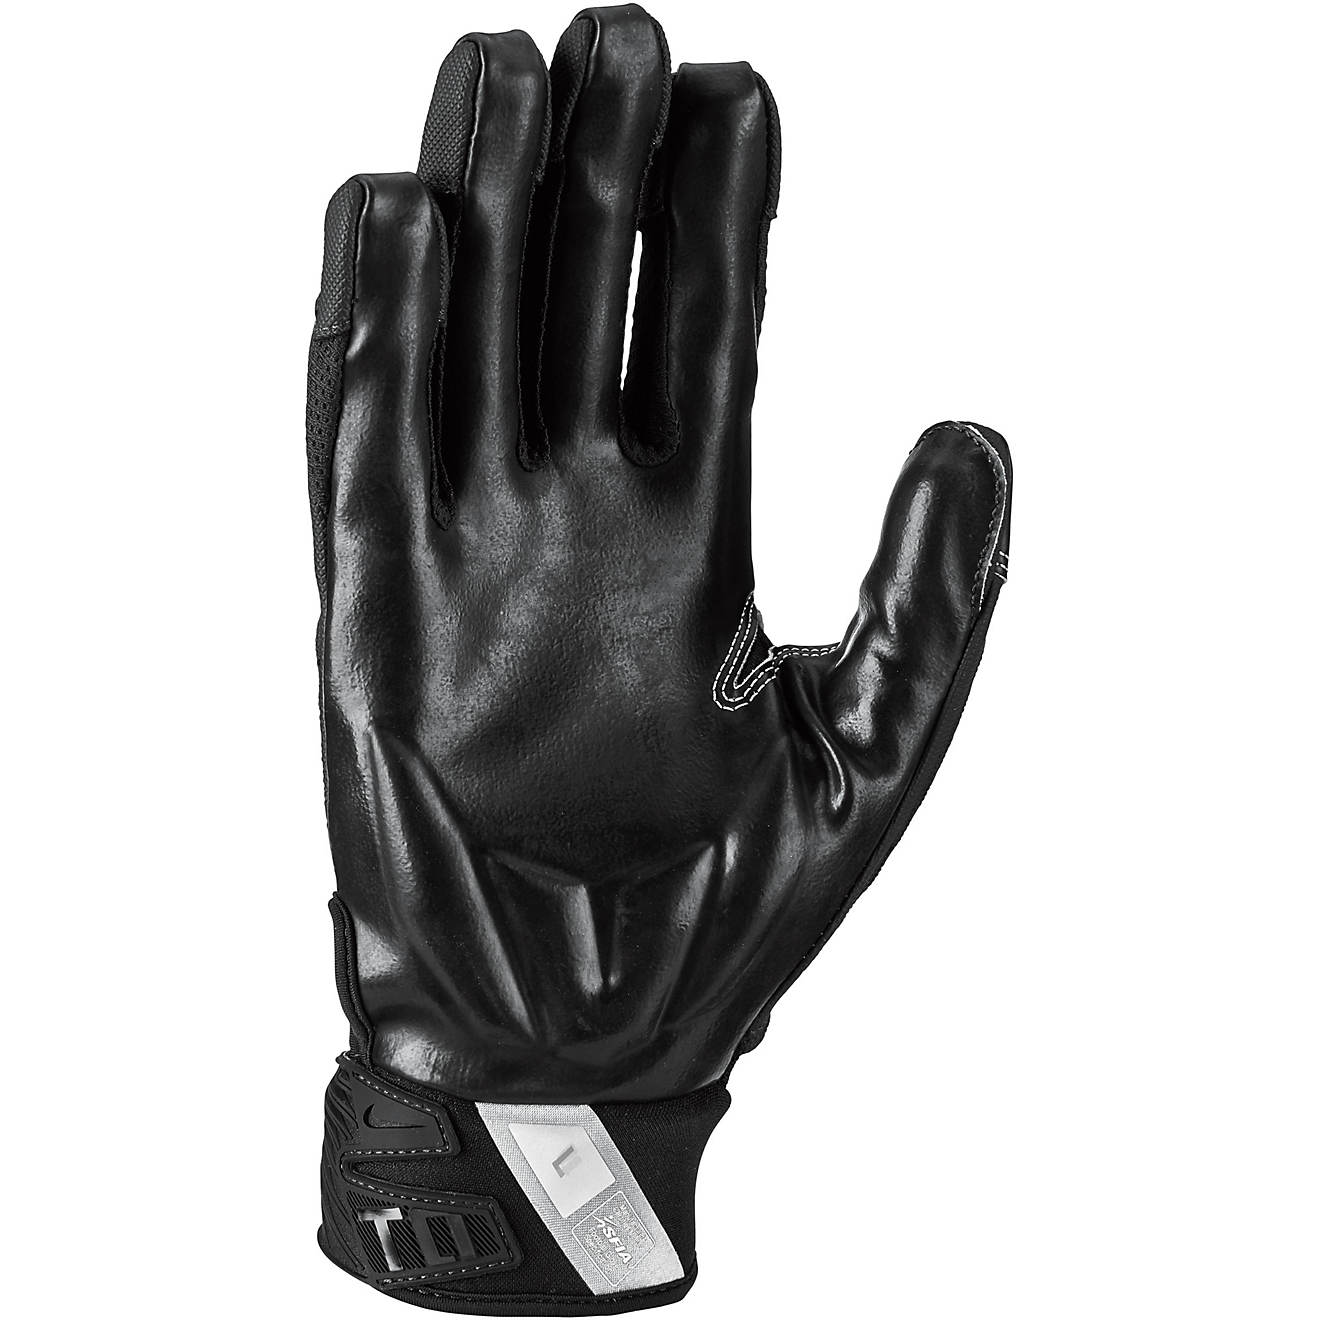 Nike D-Tack 6.0 Adult Football Lineman Gloves